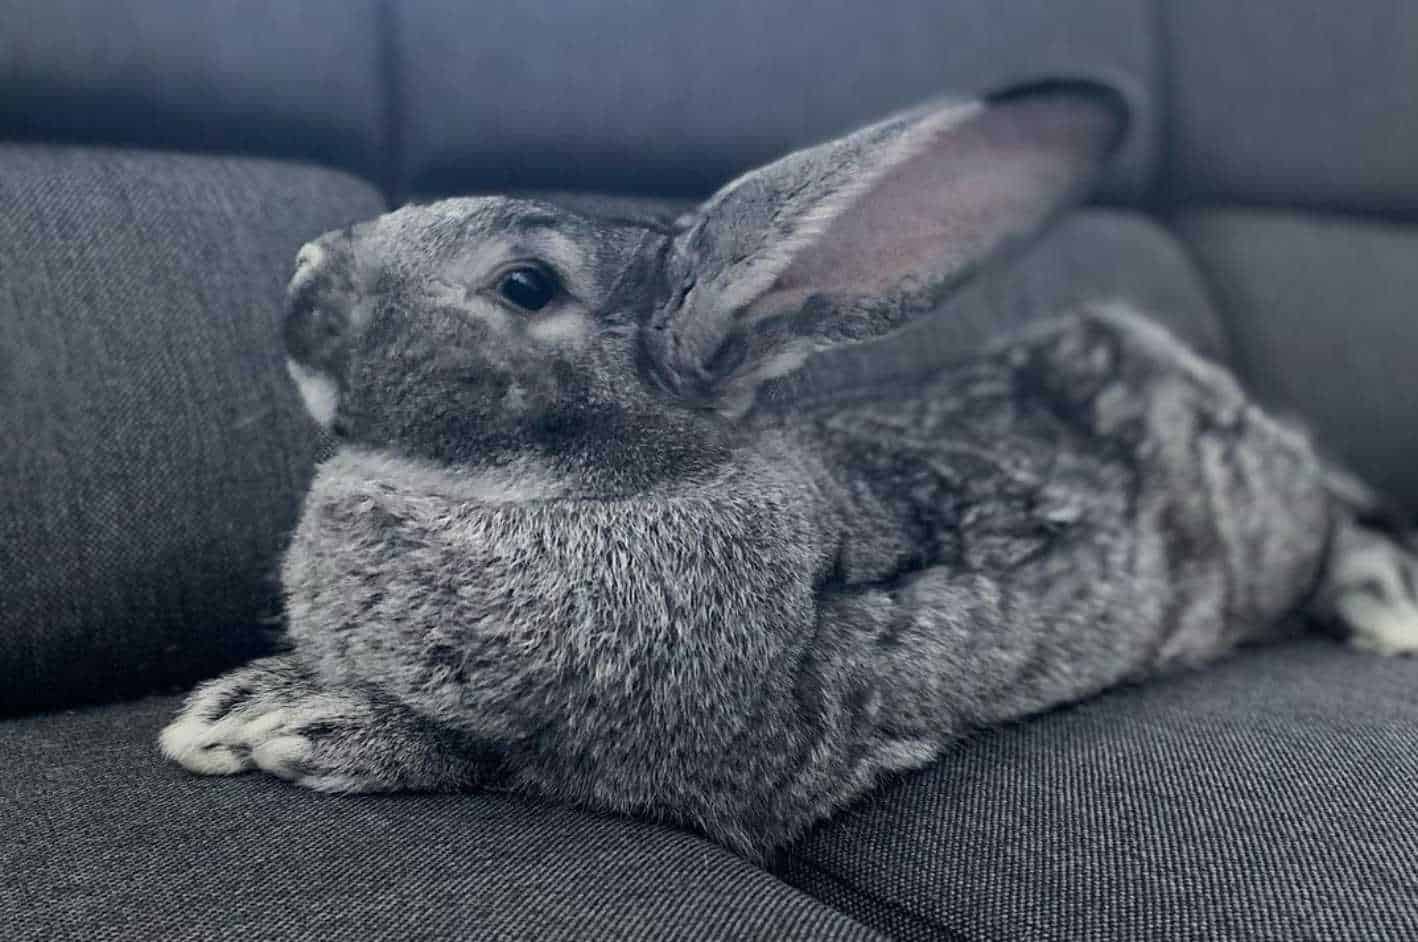 giant chinchilla rabbit